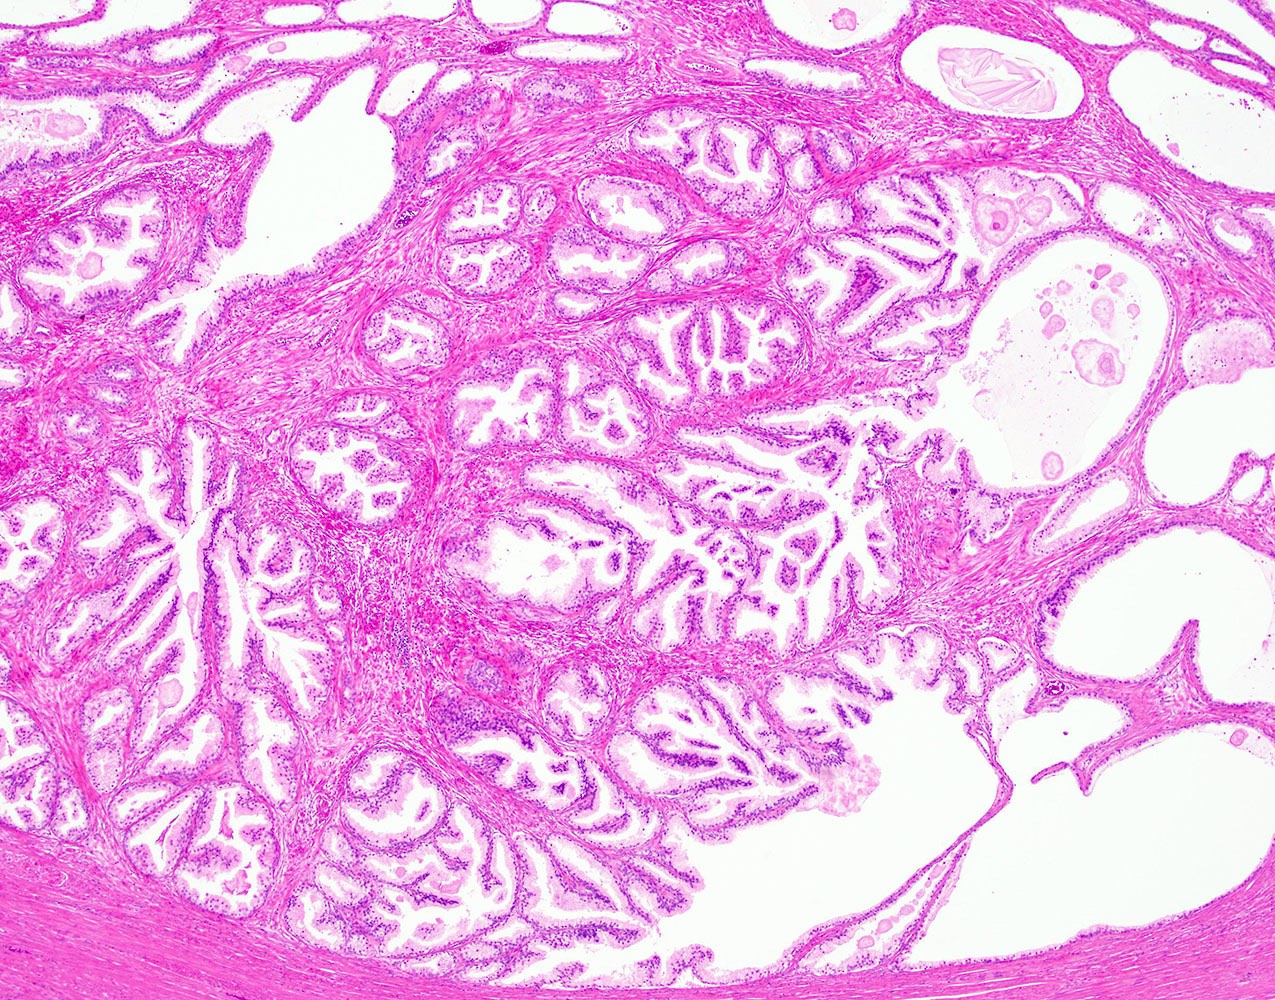 Papillary urothelial hyperplasia pathology. Papillary urothelial hyperplasia pathology